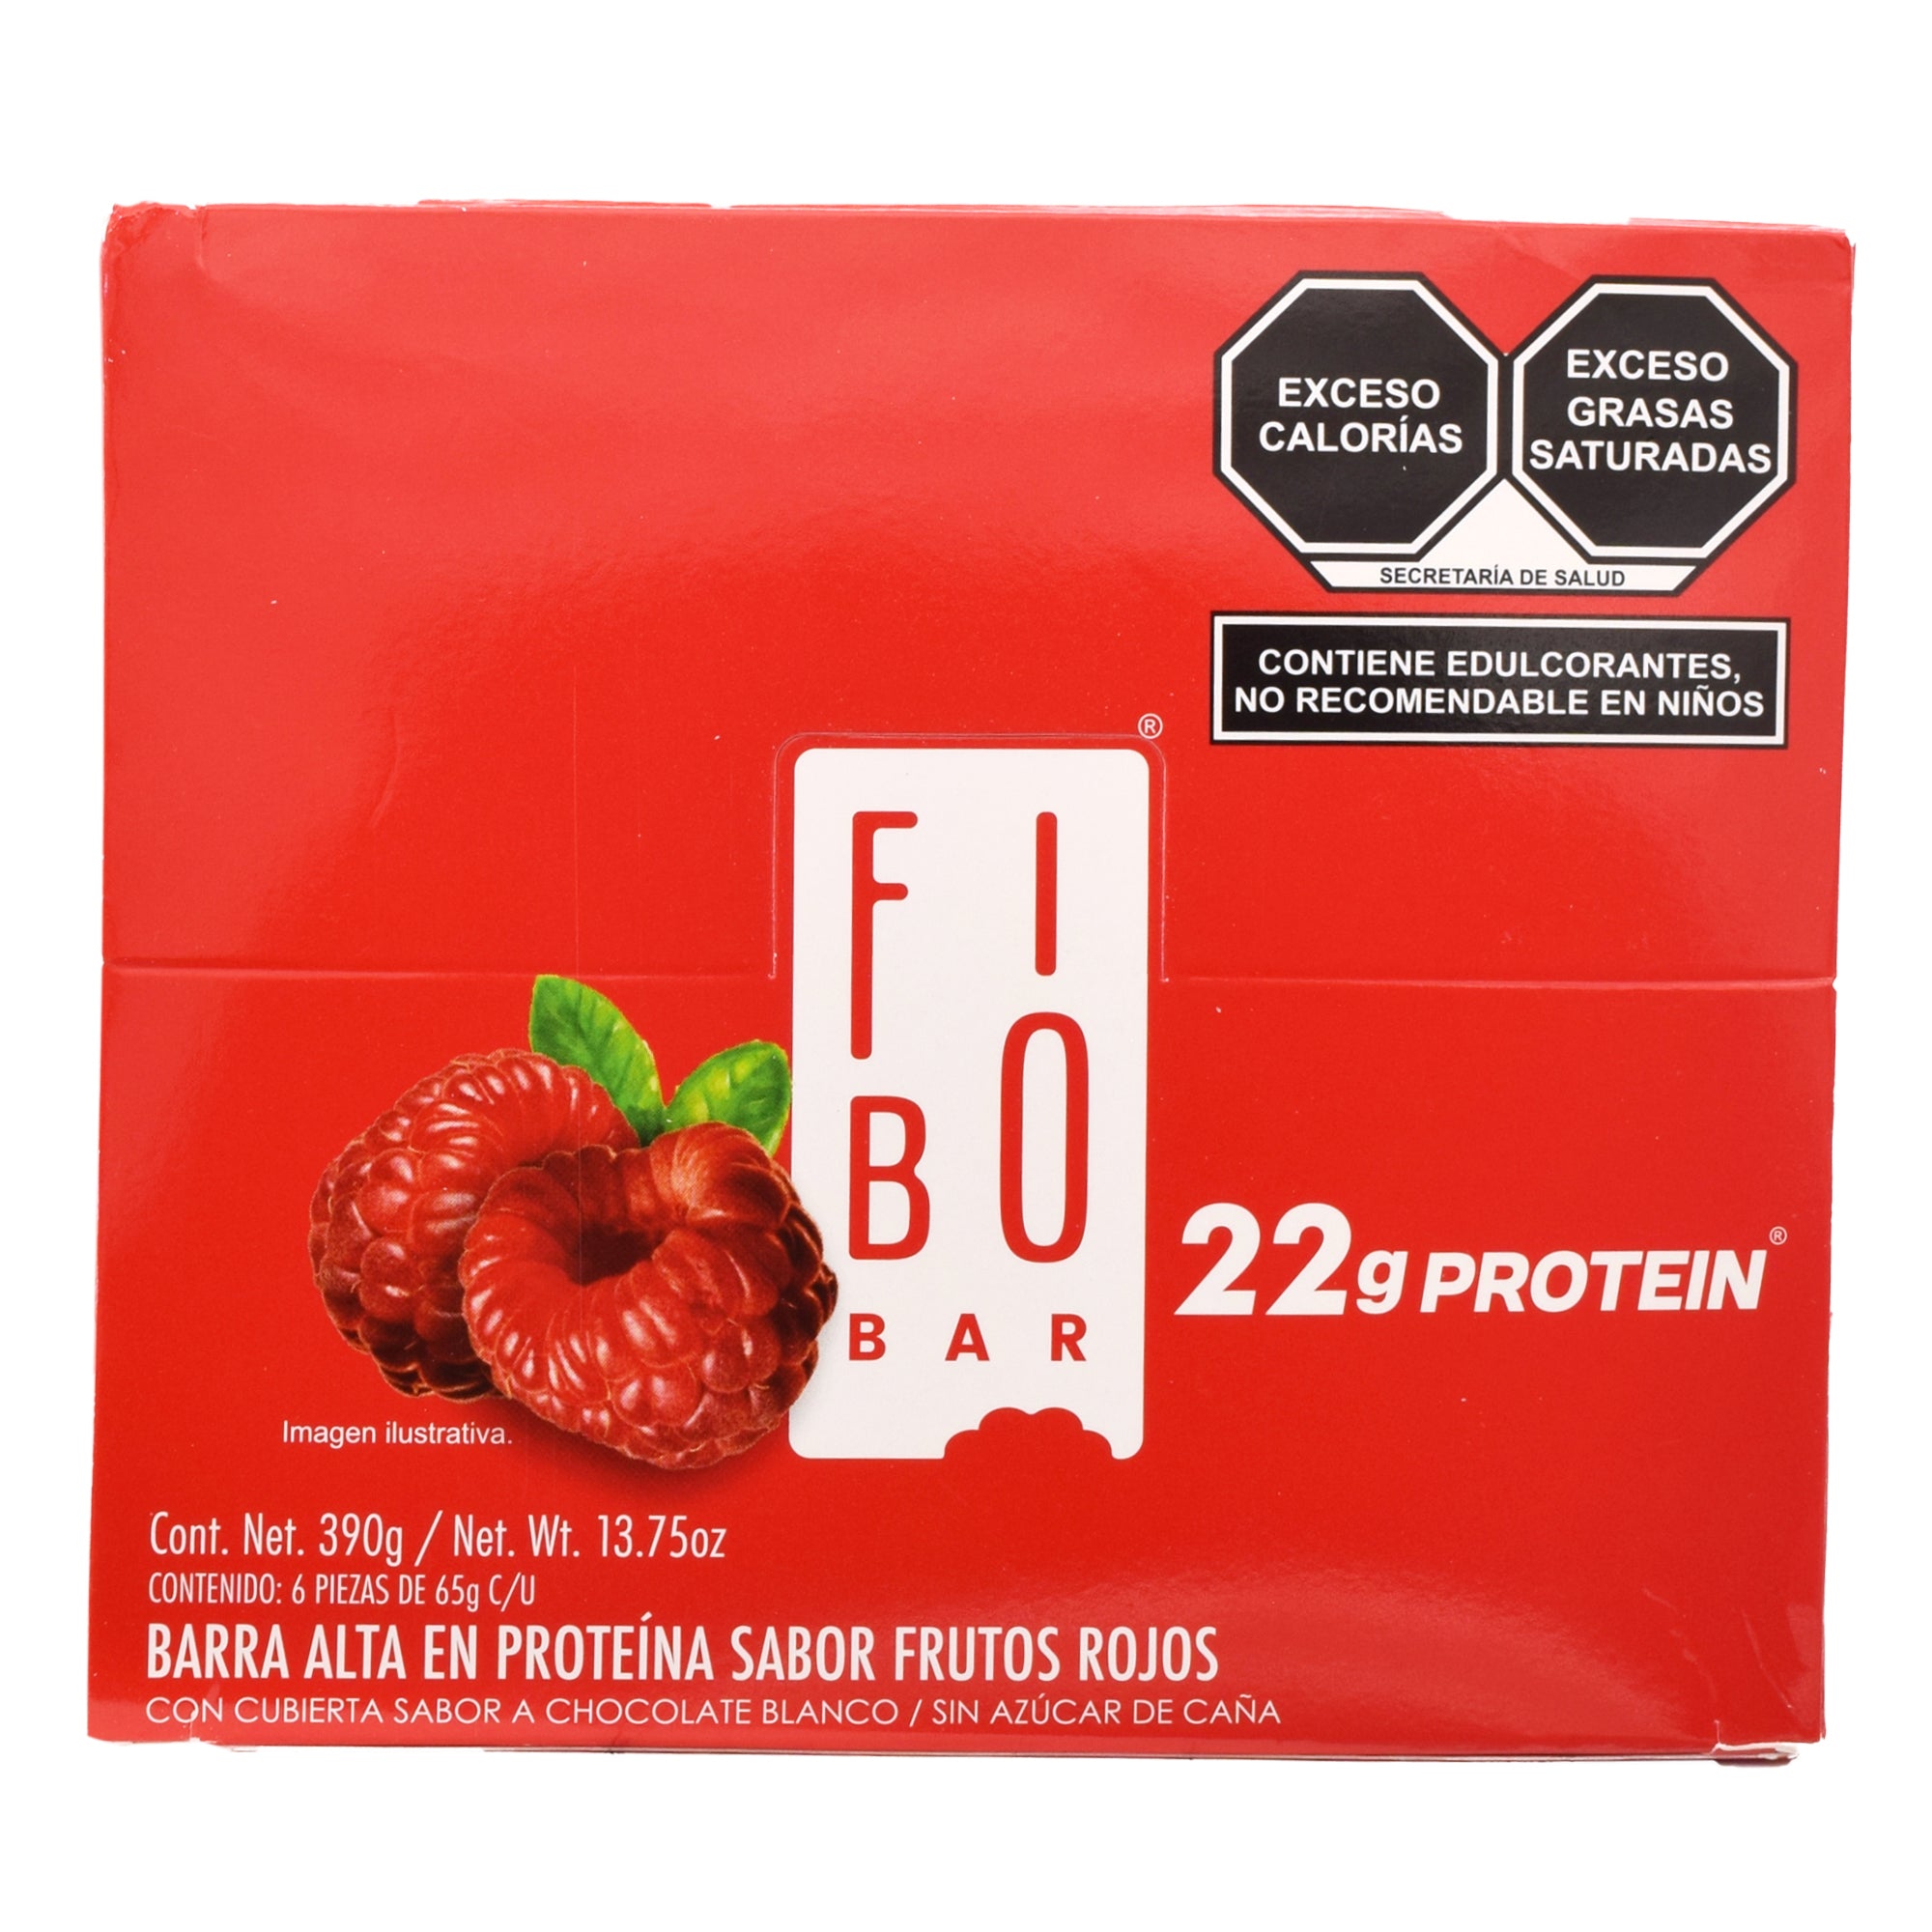 Barra de proteina cubierta de chocolate frutos rojos 65 g (PAQUETE 6)